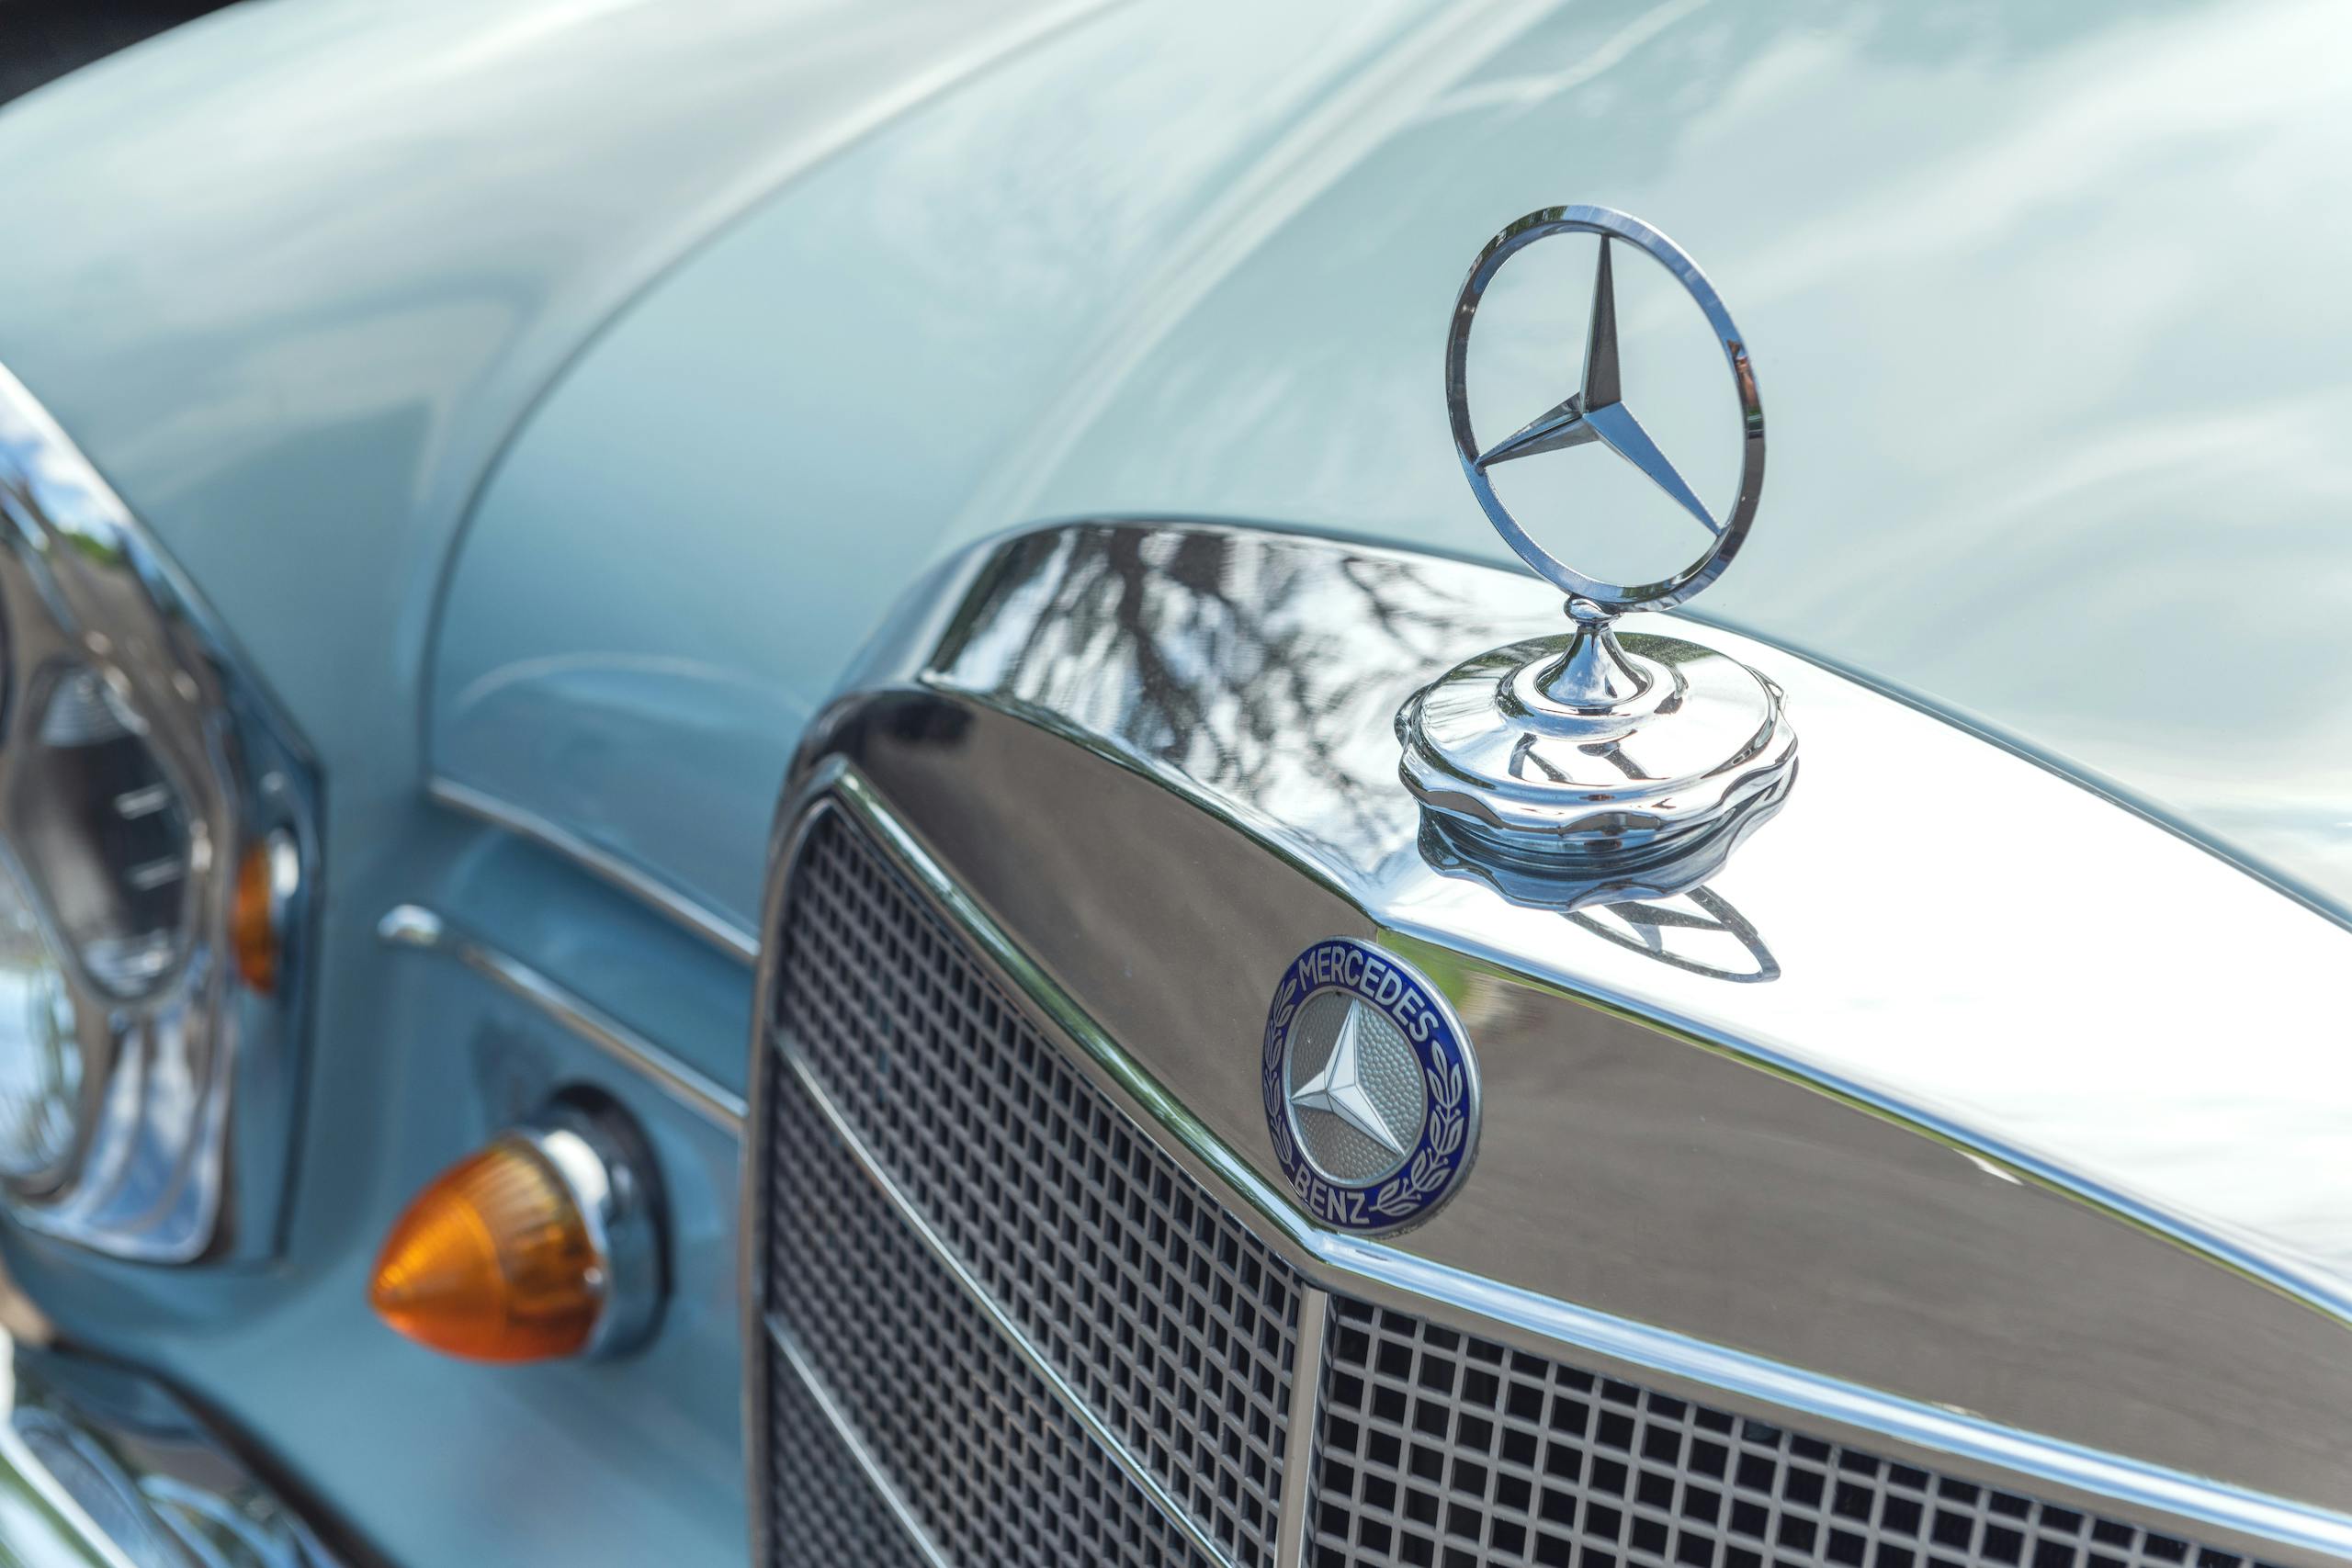 Jaime Kopchinski Mercedes Benz Expert Shop emblem ornament